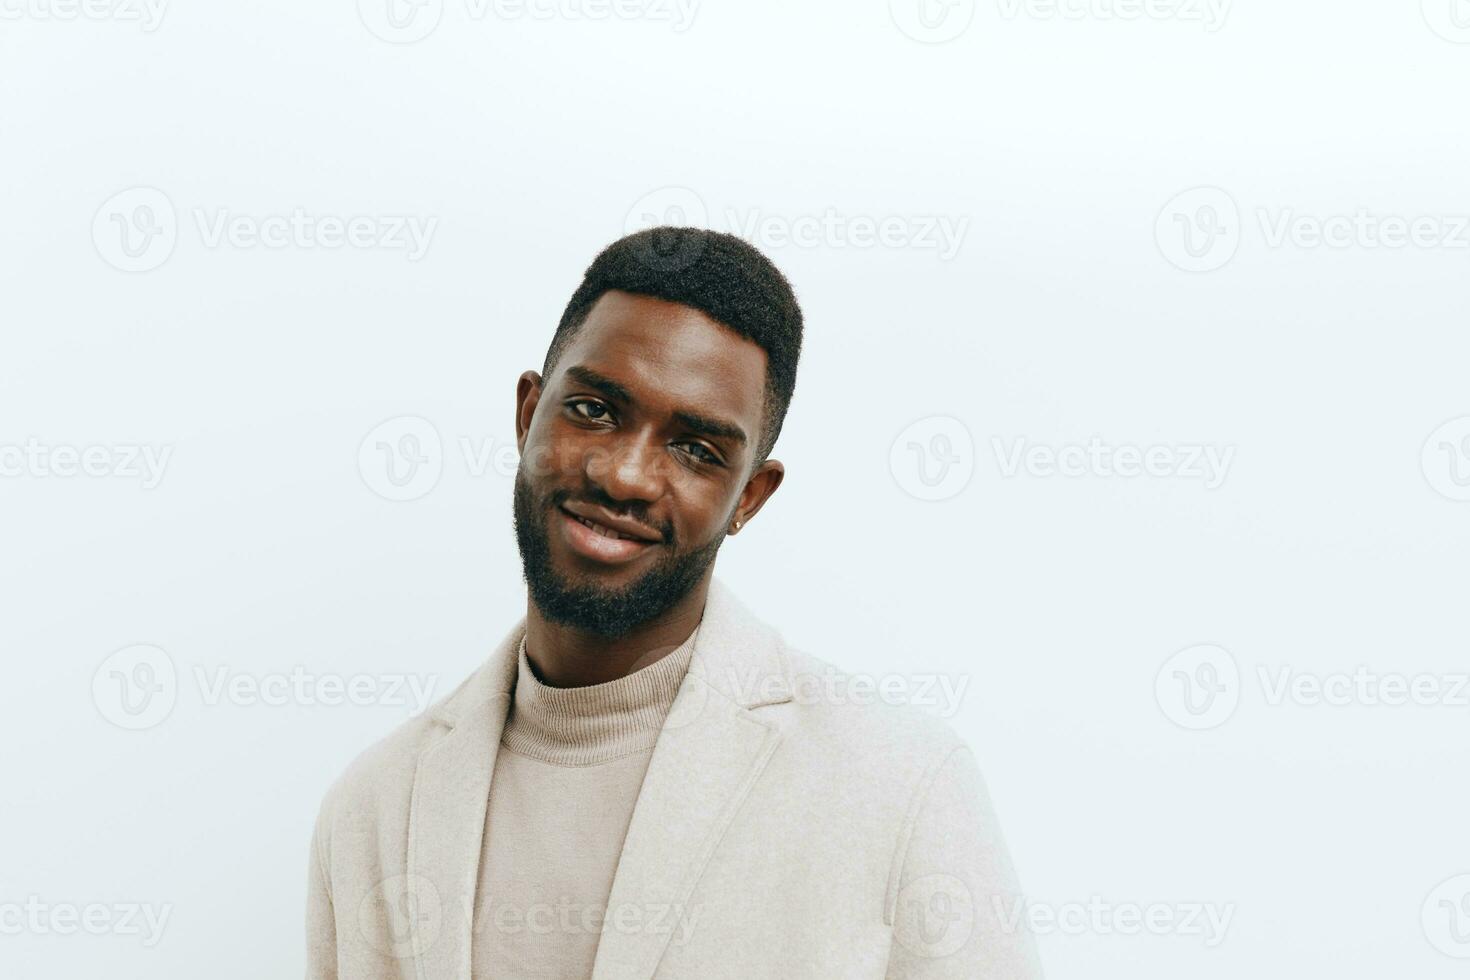 expresión hombre retrato Moda casual chico elegante antecedentes atuendo africano americano africano negro americano foto